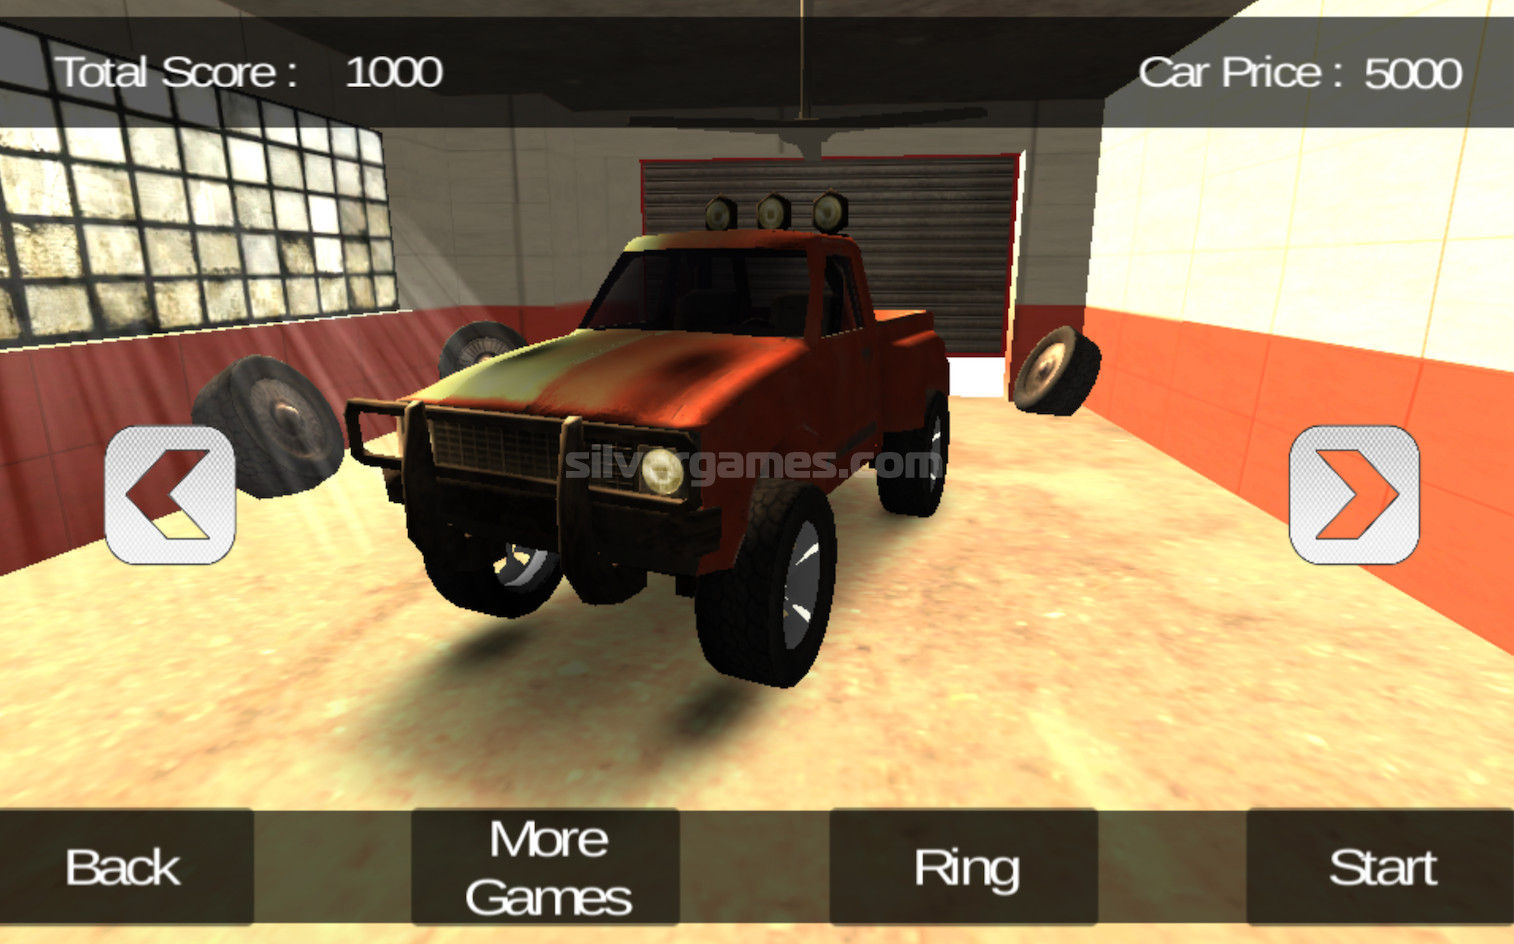 Parking Car Games 3D Offraod Free Running Kar Super Drifting Off-road New  Online Highway Simulator